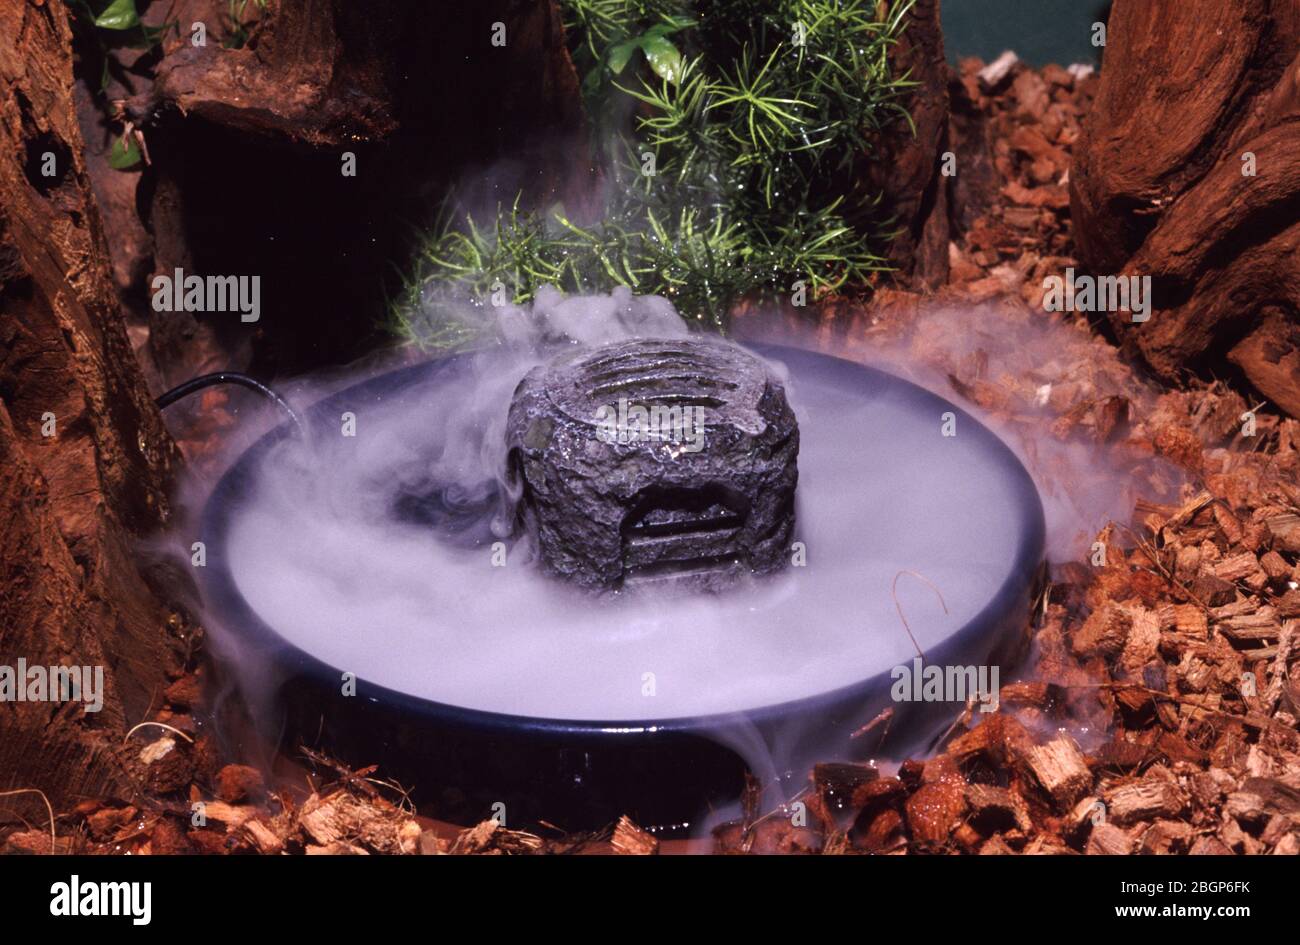 Ultrasonic humidifier for terrarium Photo - Alamy